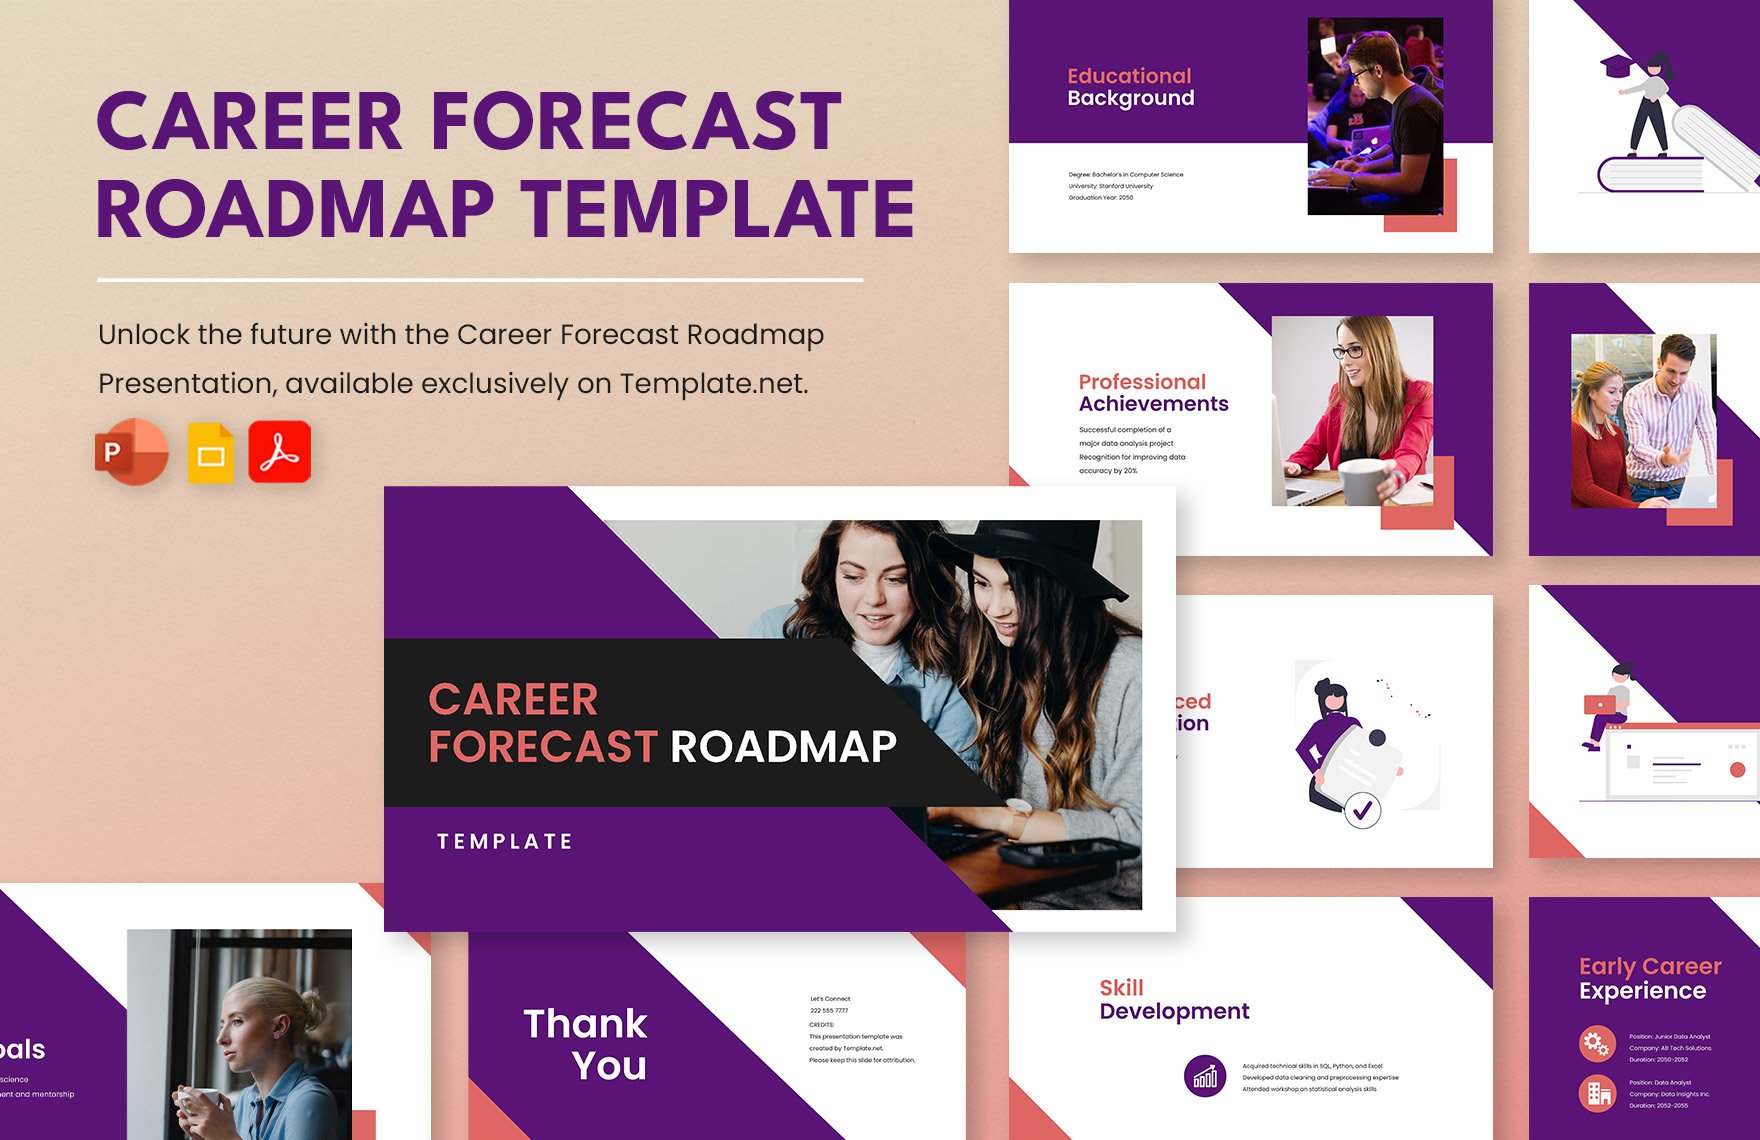 Career Forecast Roadmap Template